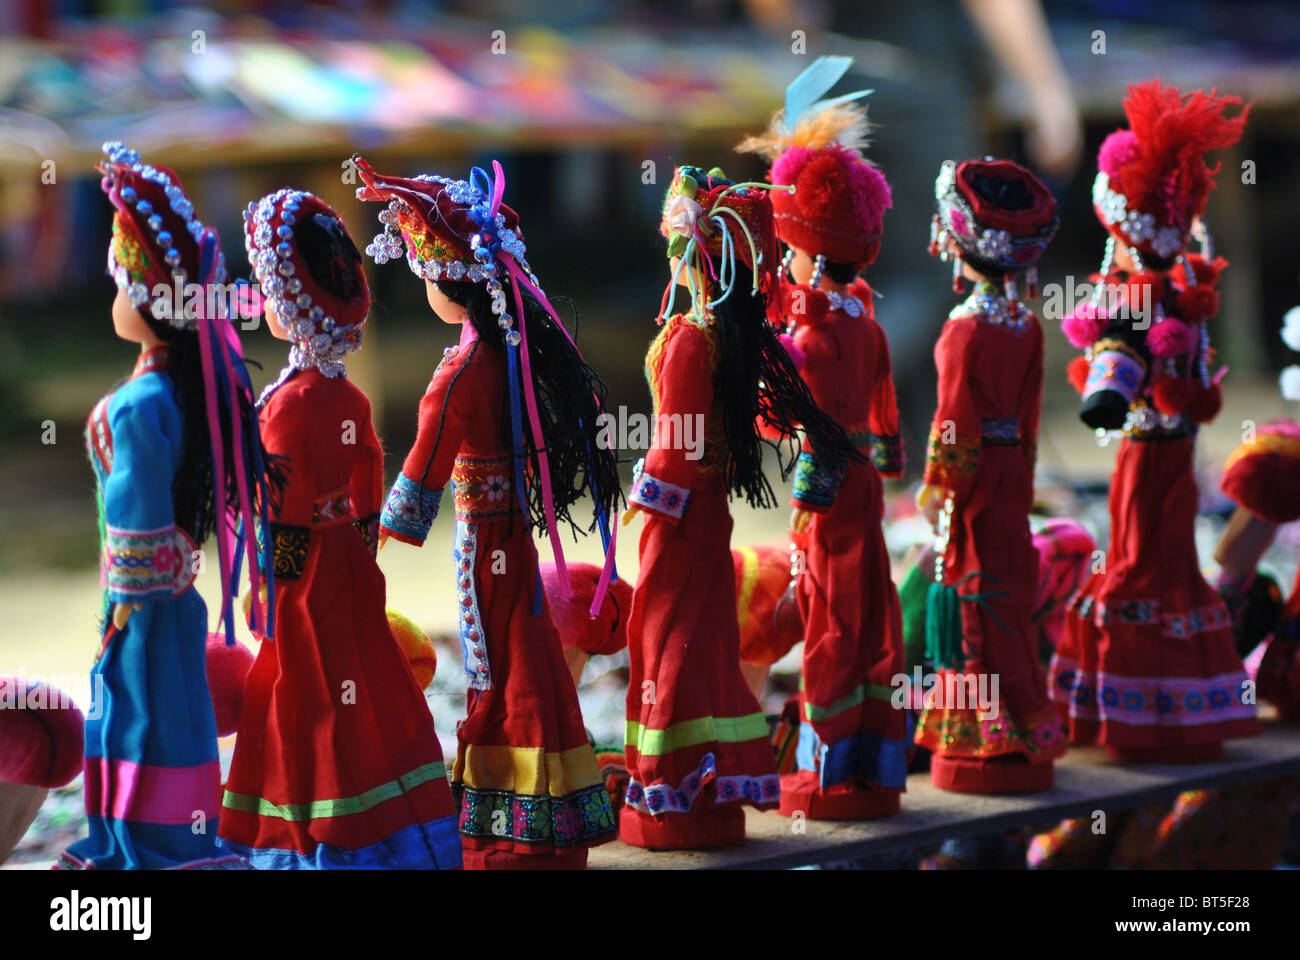 Souvenir models of Flower Hmong people at Bac Ha market, Vietnam Stock Photo